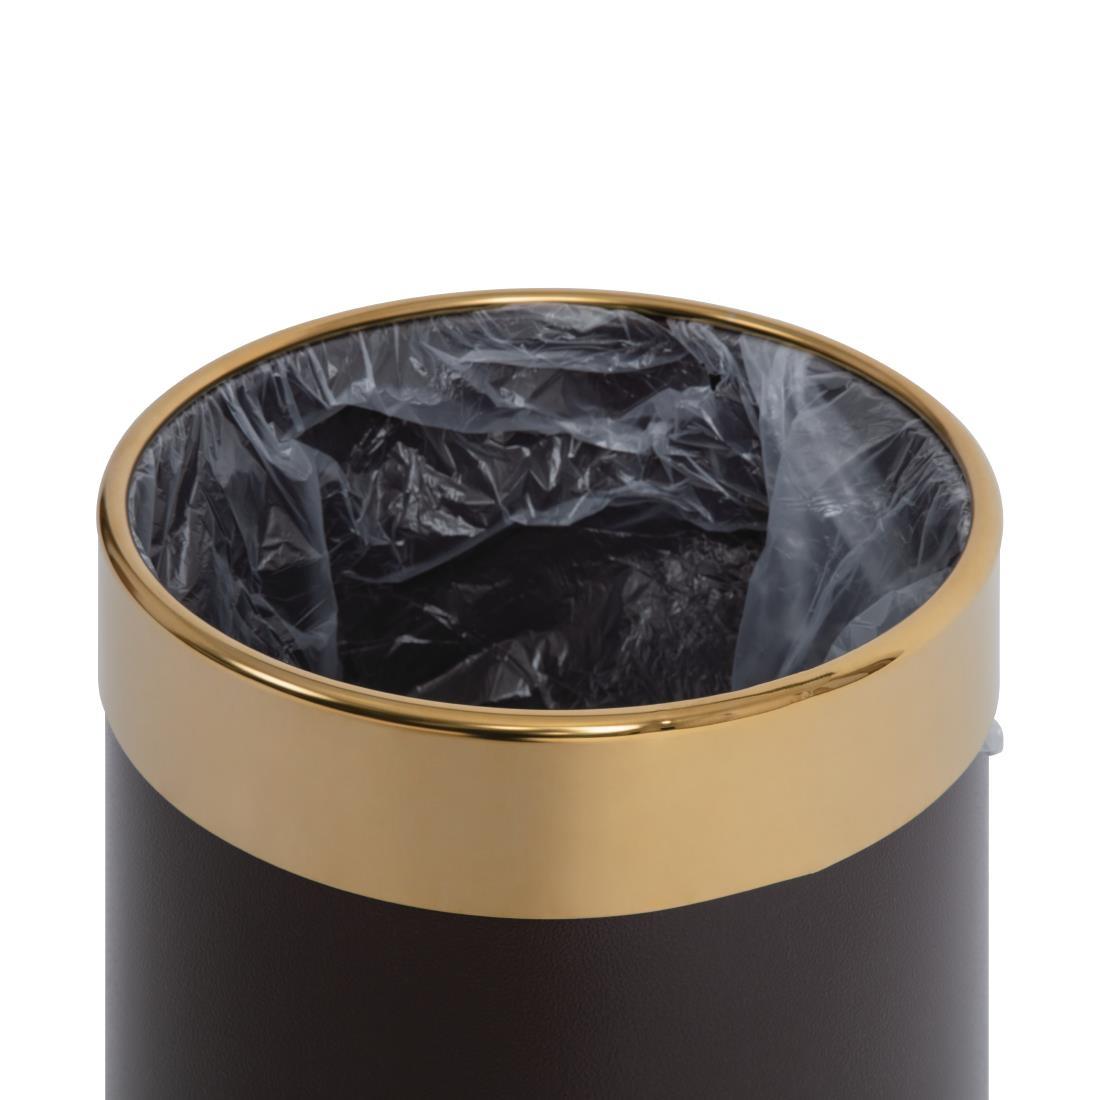 Bolero Waste Paper Bin with Gold Rim - Y804  - 5